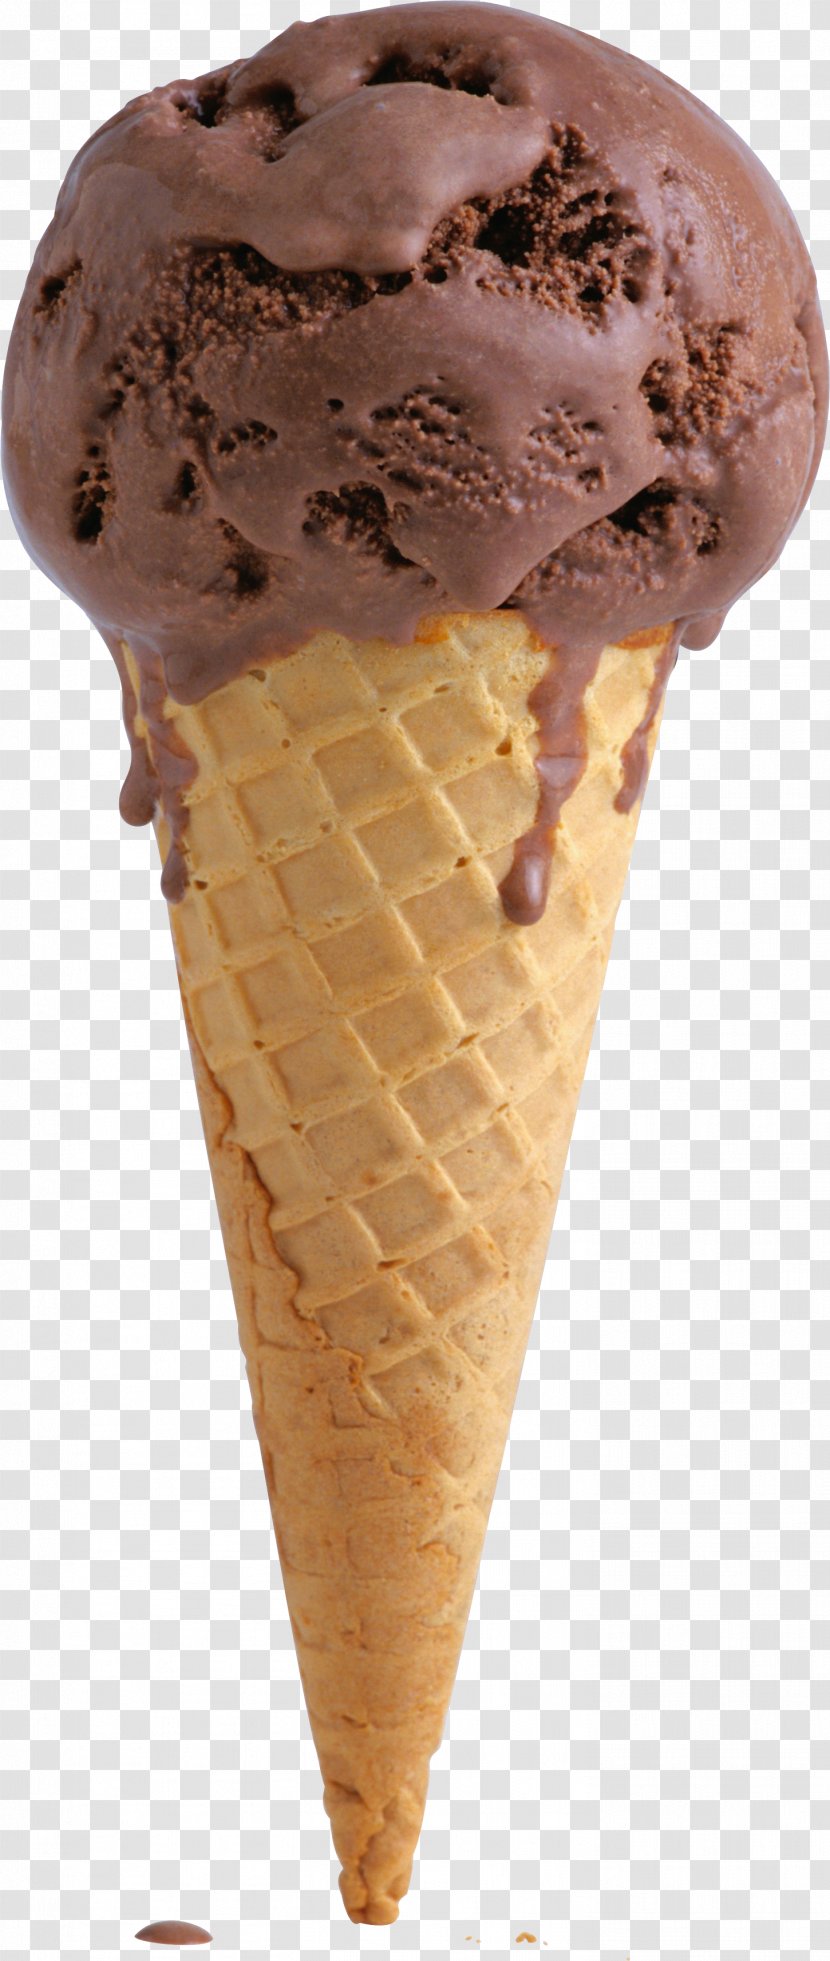 Chocolate Ice Cream Milkshake Cone - Dairy Product - Image Transparent PNG